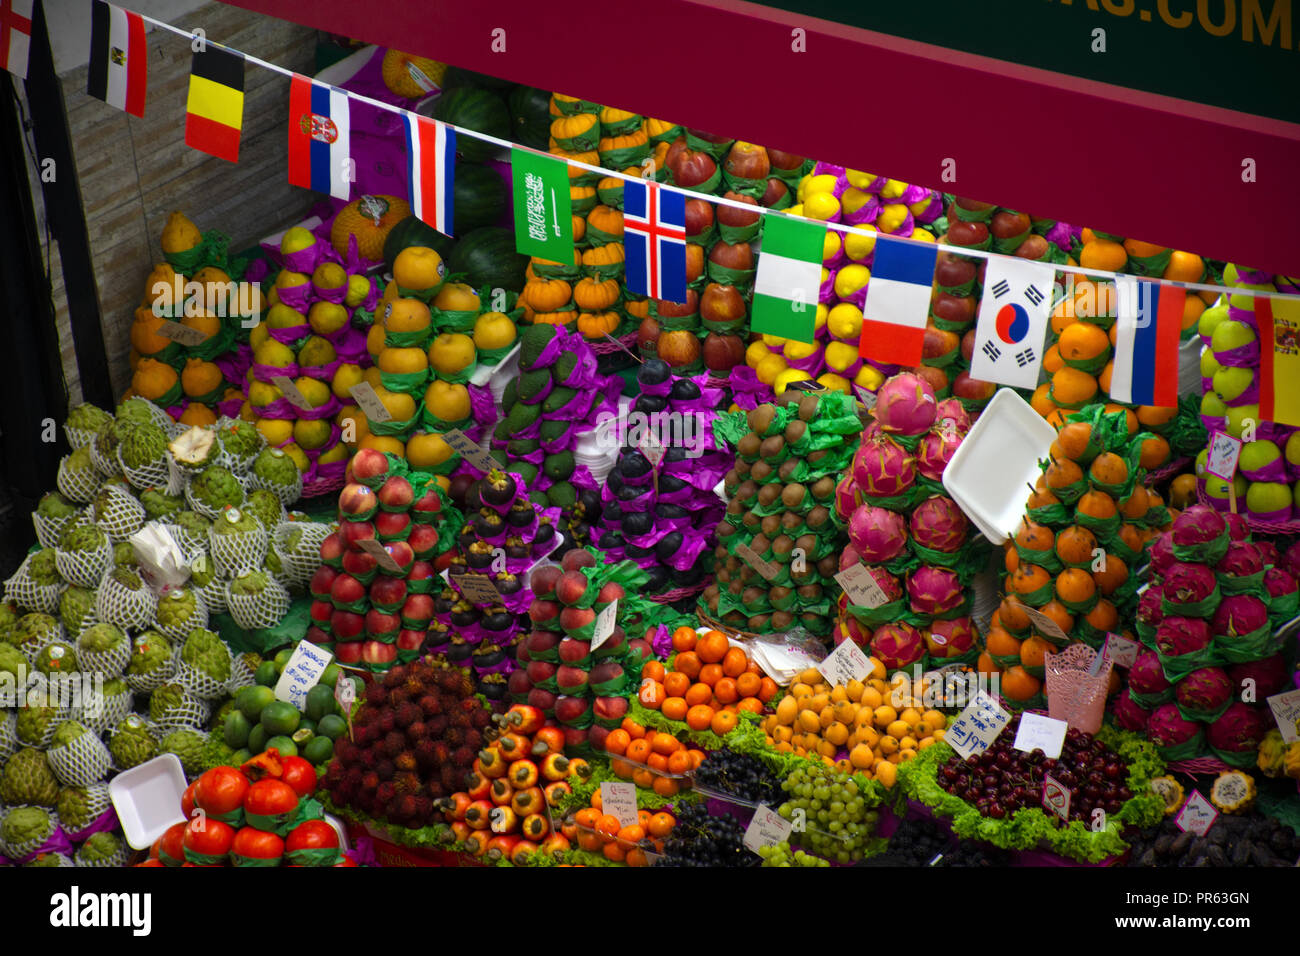 Tropical fruits on display at the Municipal Market, Sao Paulo, Brazil Stock Photo